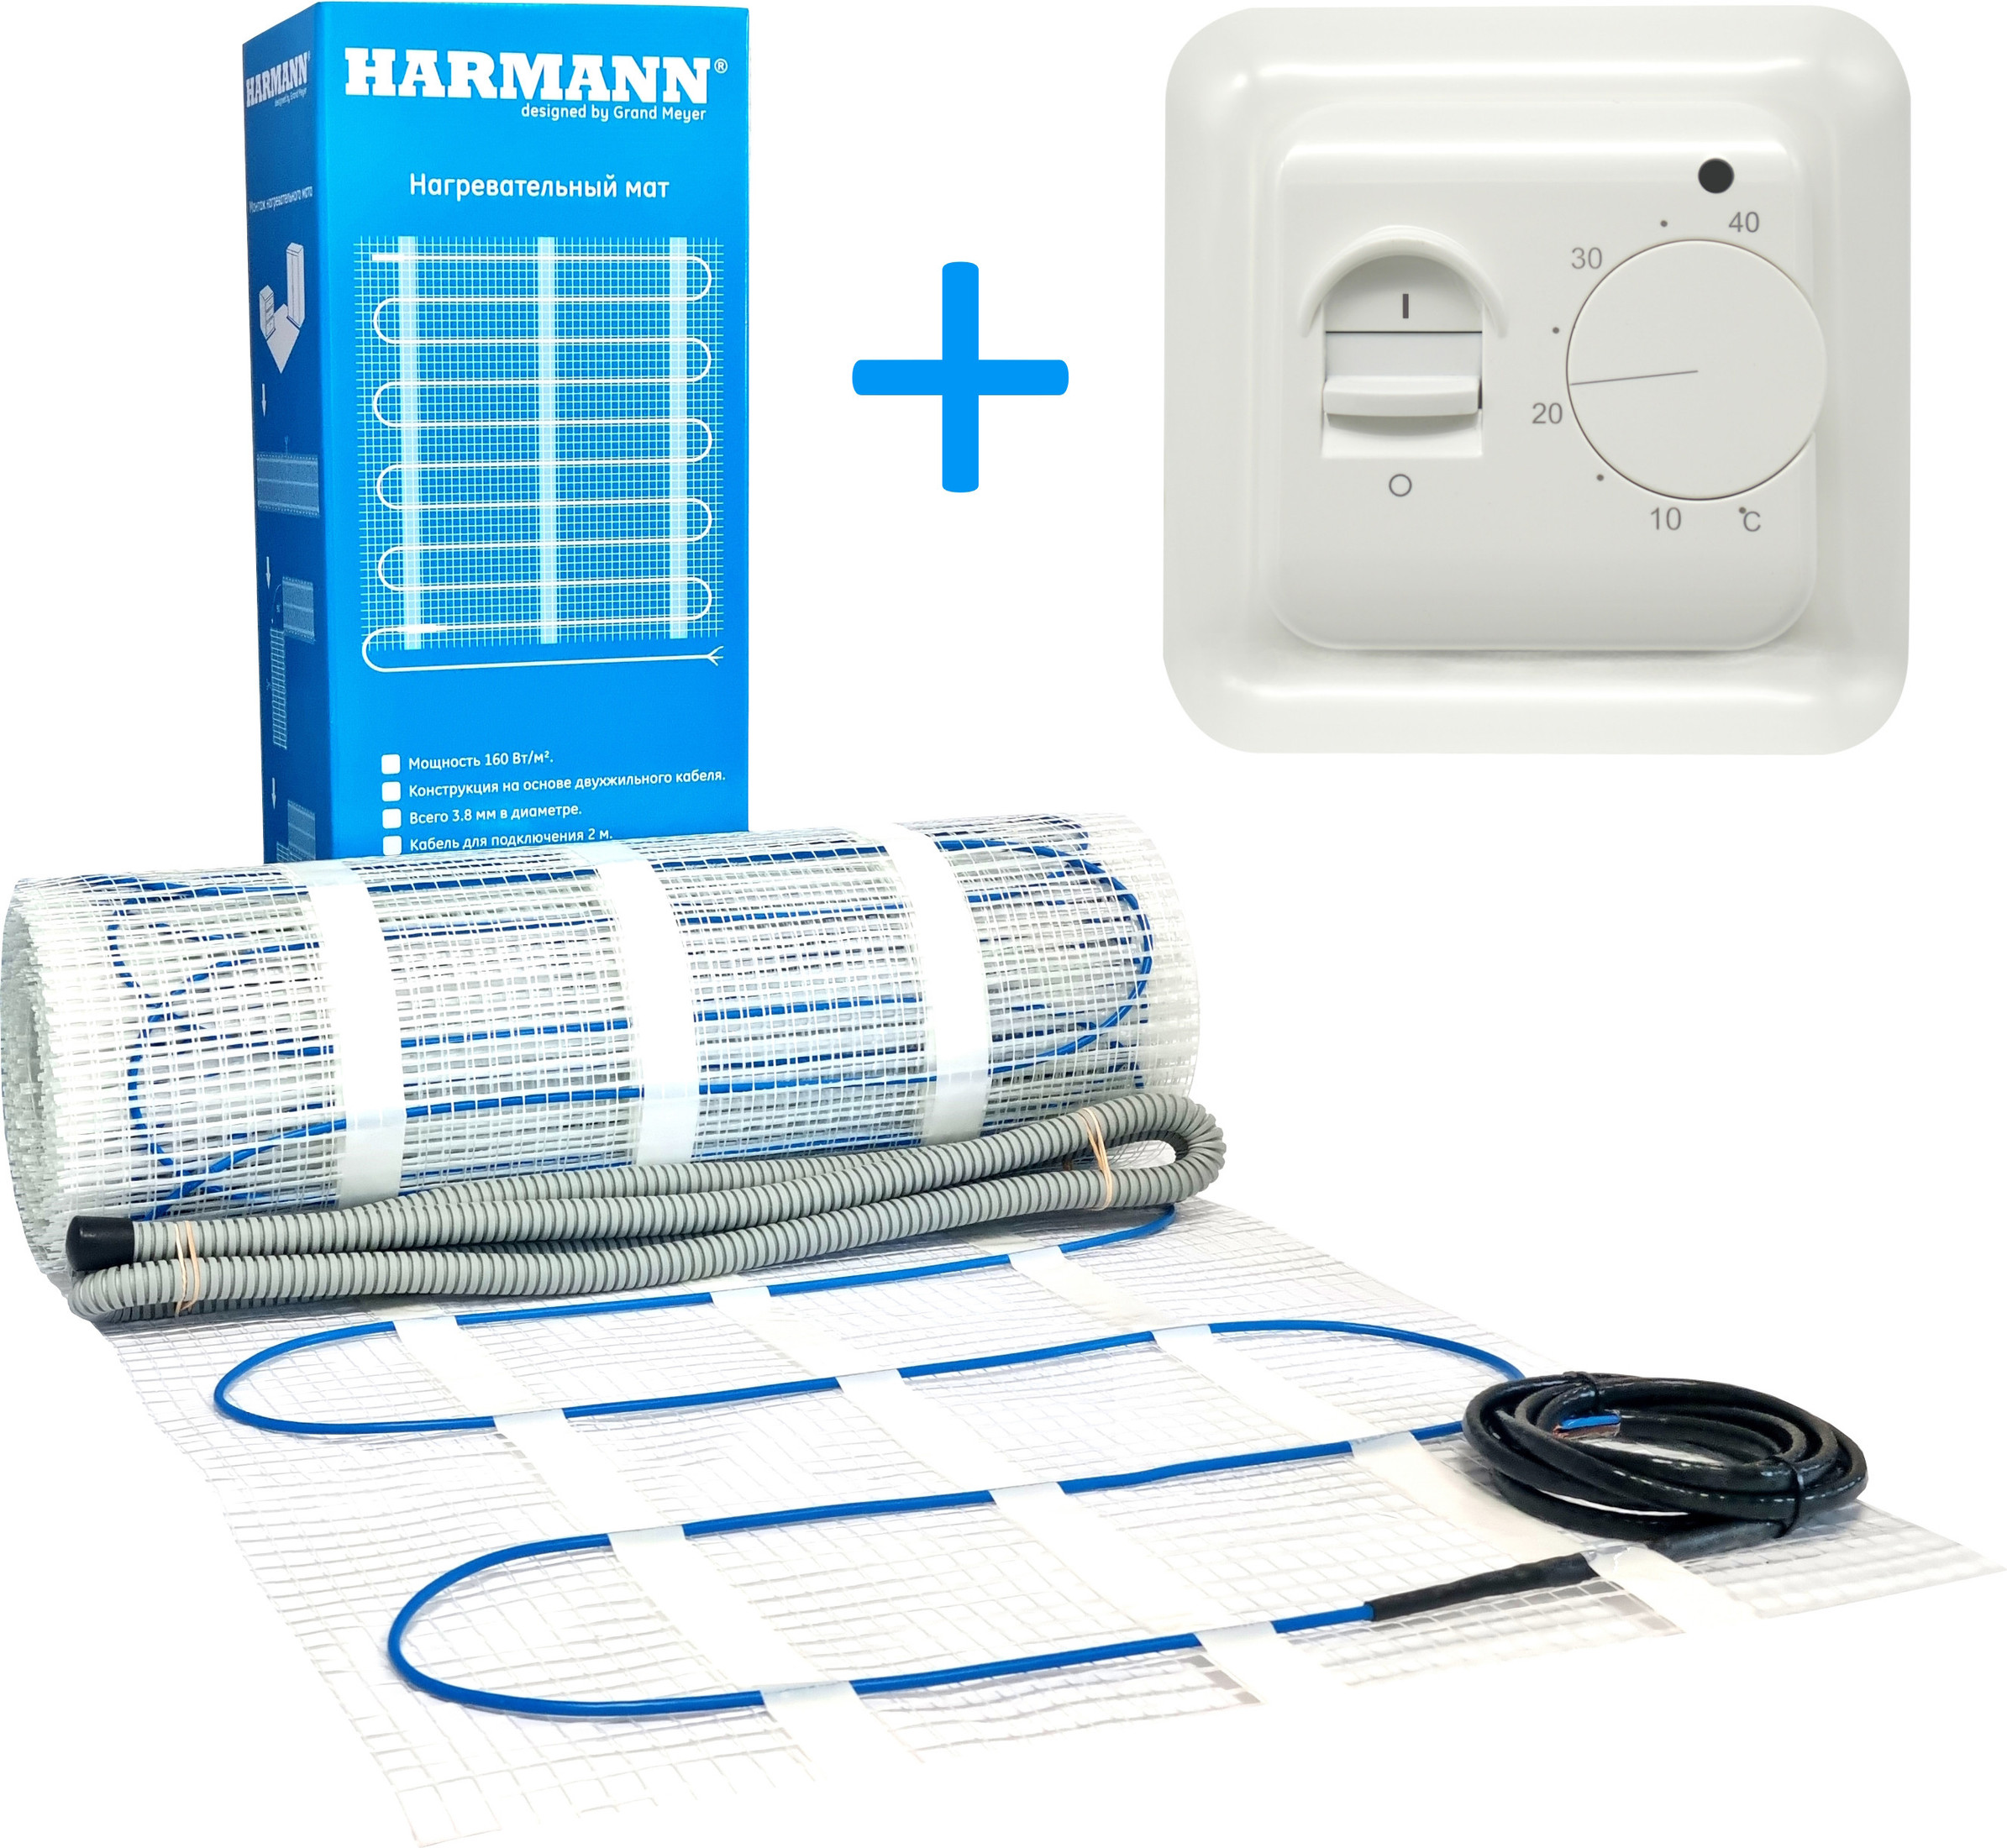 

Нагревательный мат Harmann W160-080 8 кв.м. 1280 Вт (с терморегулятором MST-1)